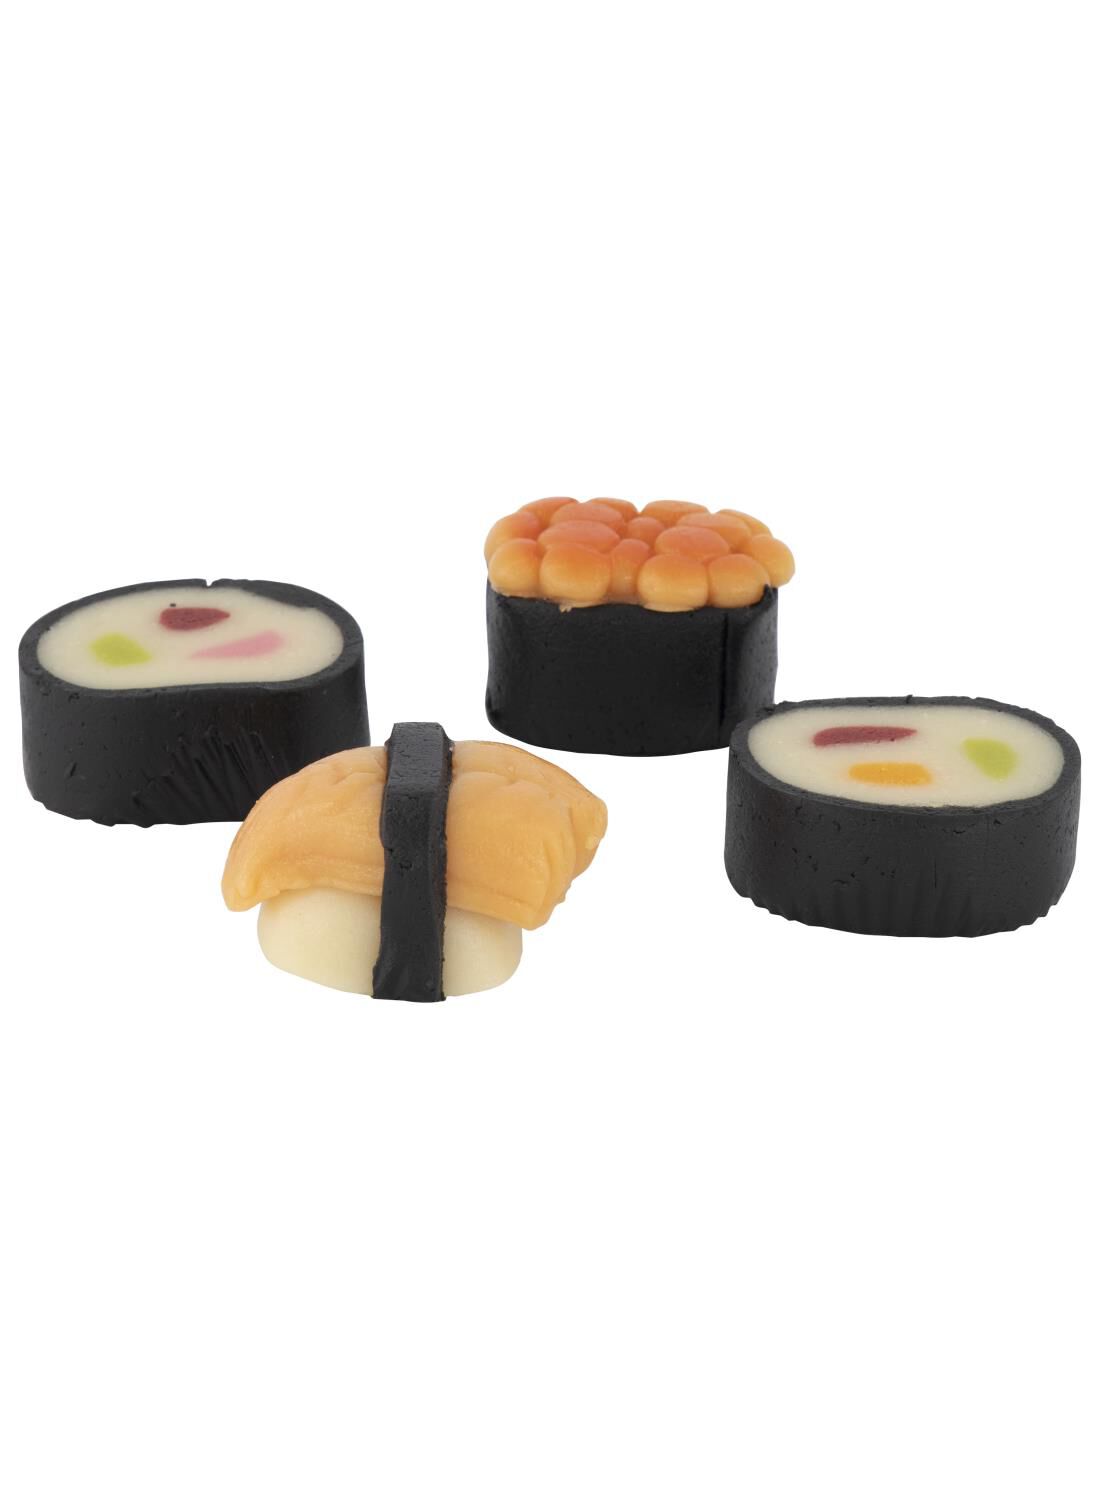 Wereldrecord Guinness Book Ambient Frustratie HEMA Marsepein Sushi 115gram